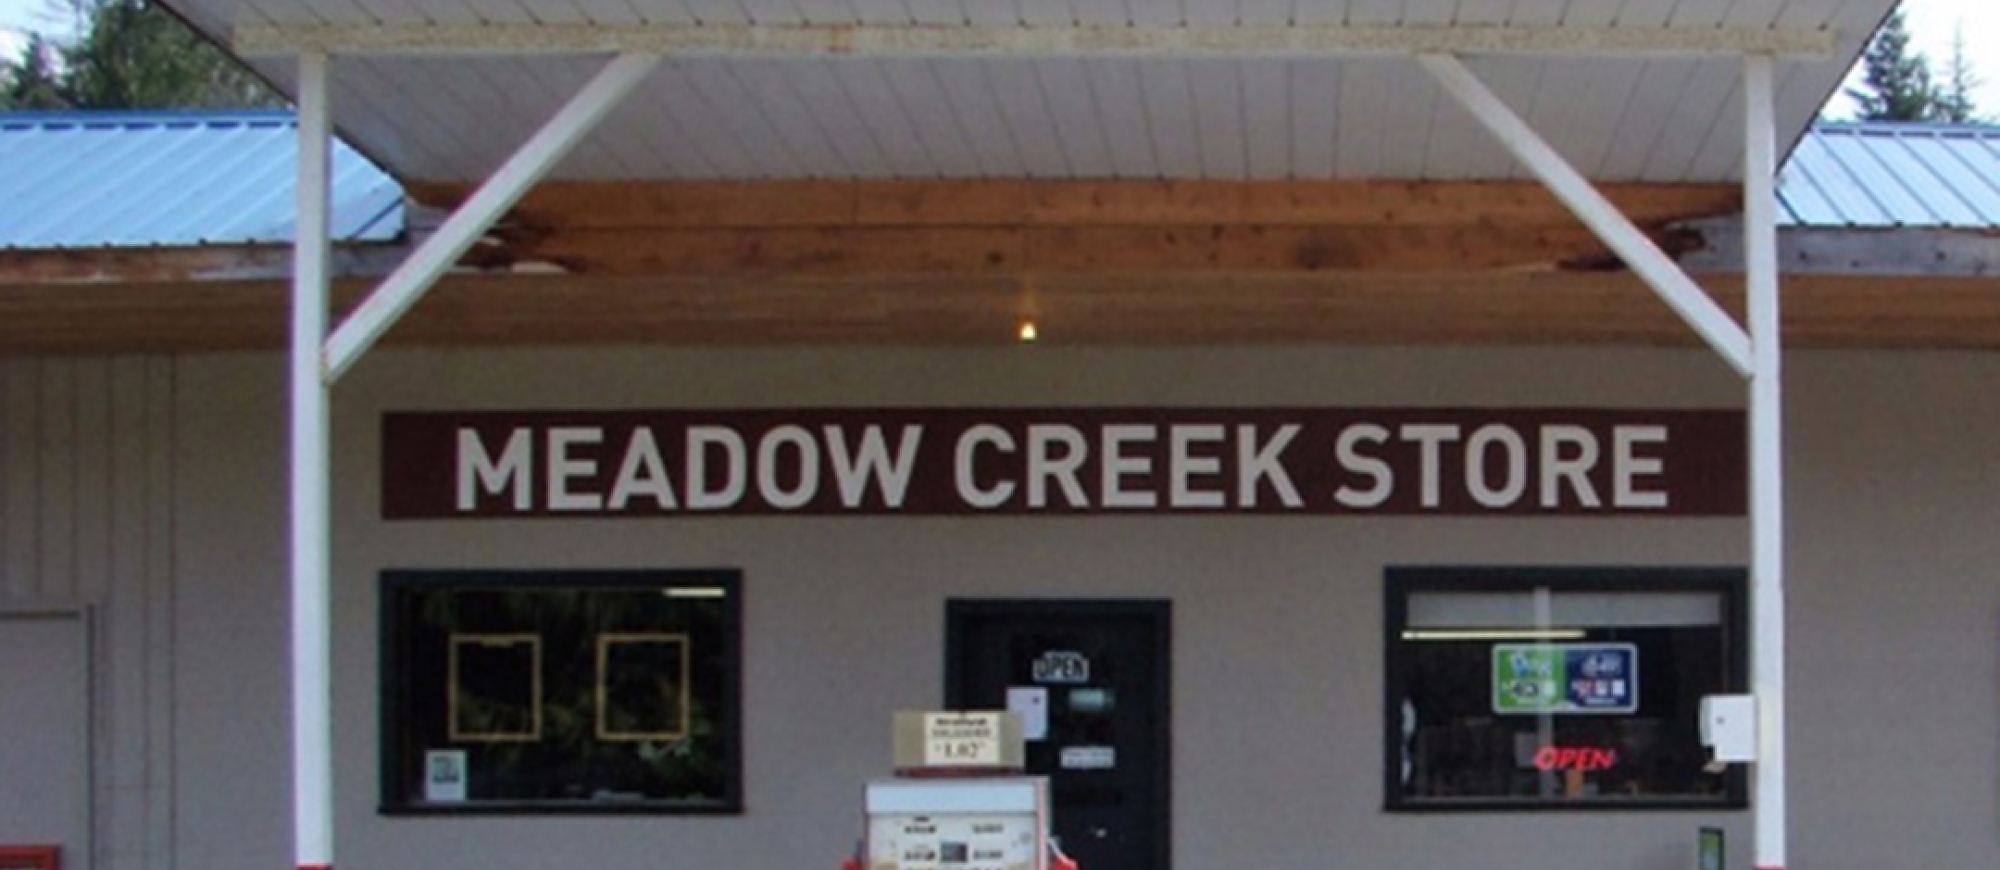 Meadow Creek Store / Krik Services